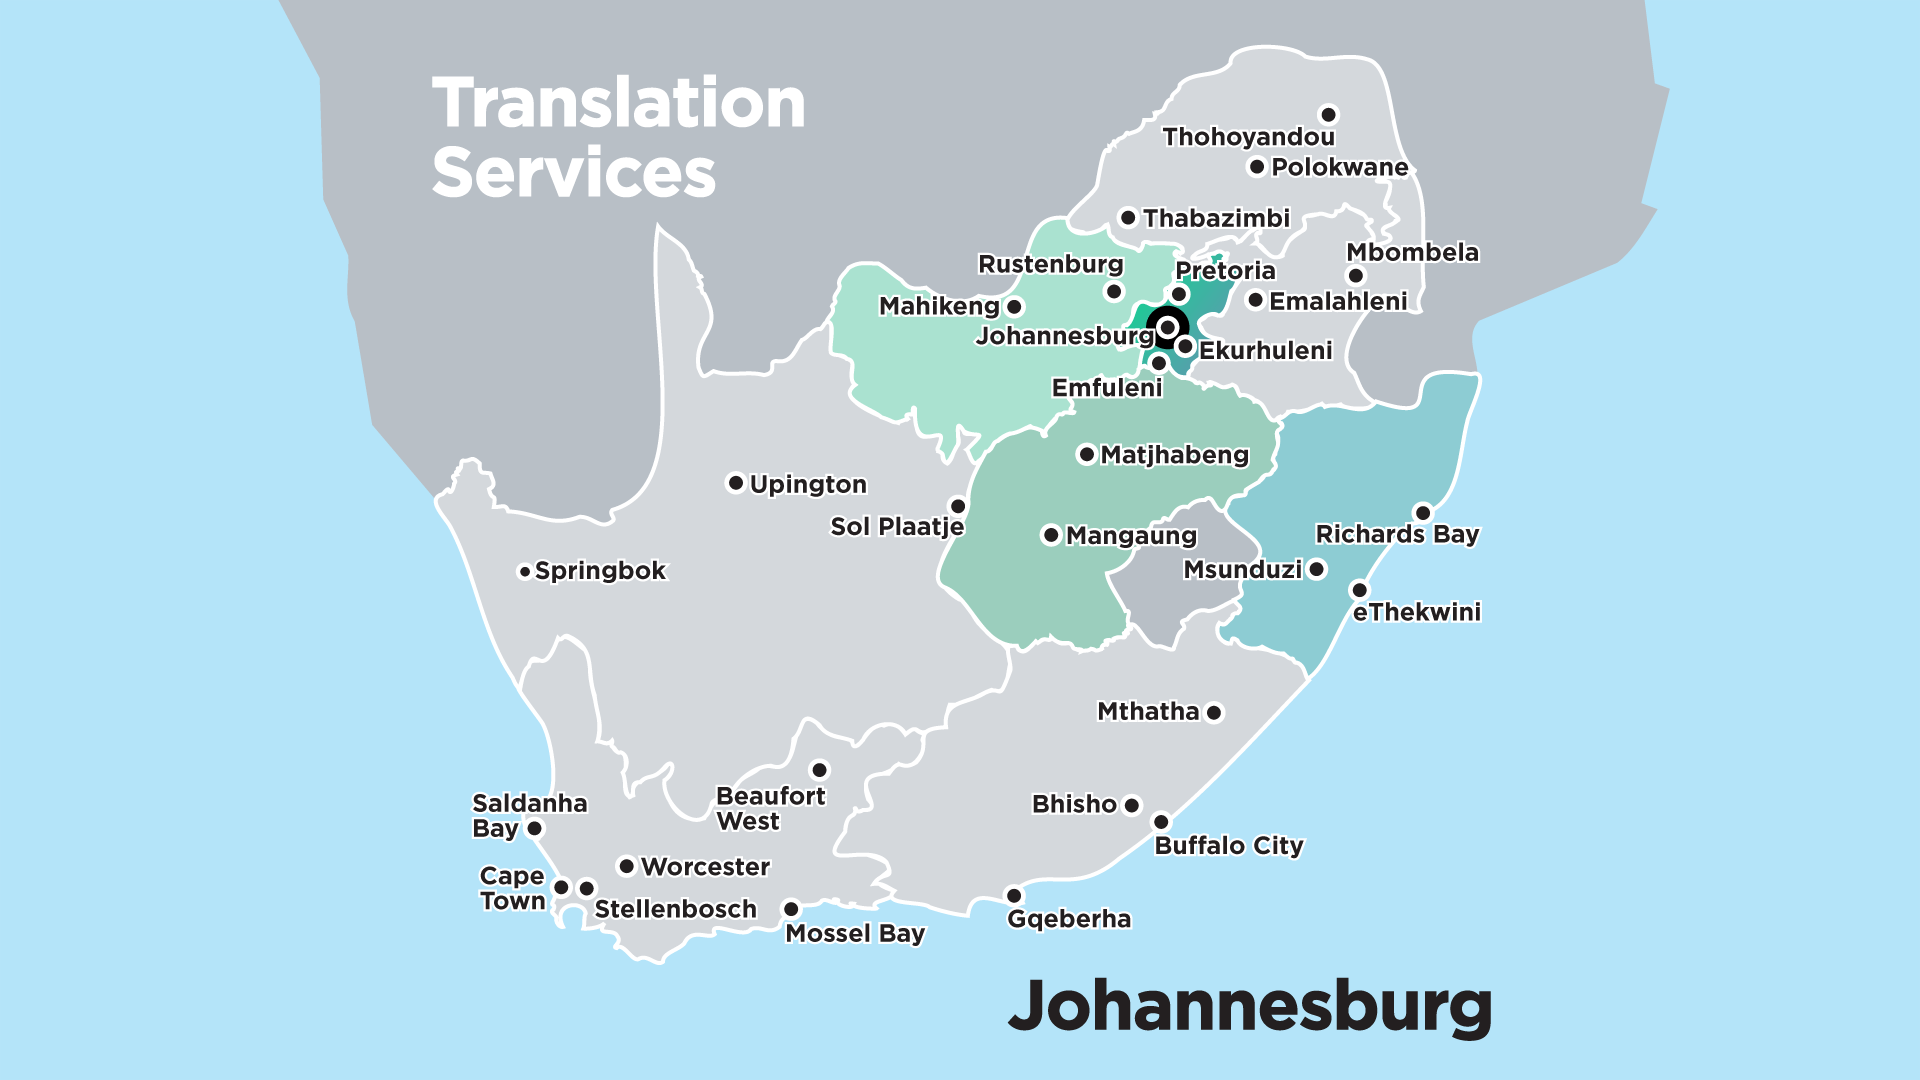 Johannesburg Translation Services